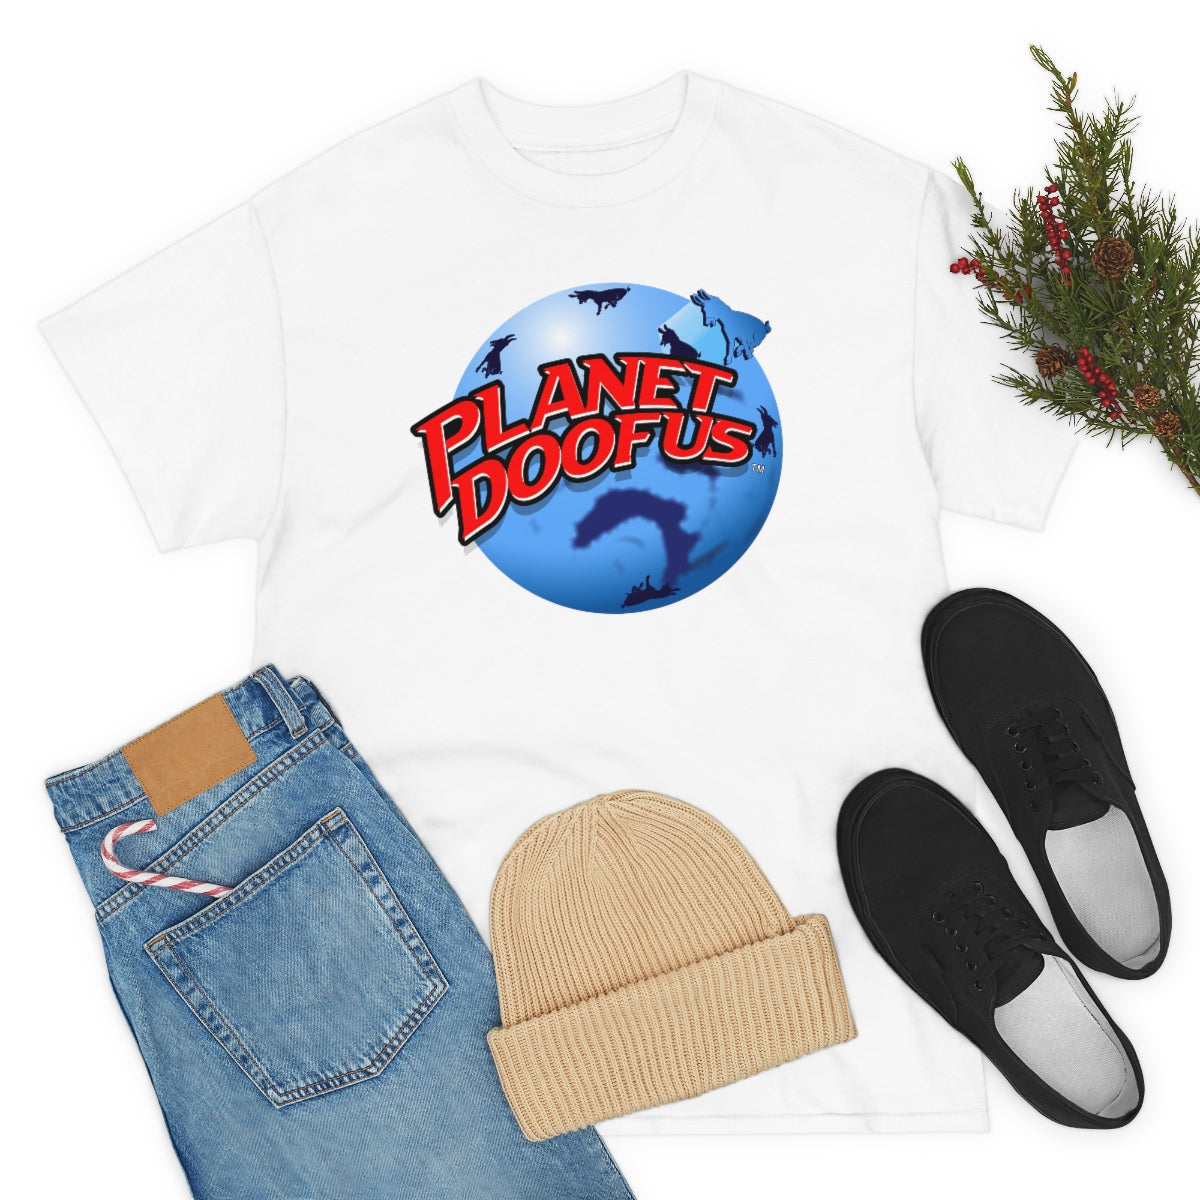 Planet Doofus Hollywood Unisex  Short Sleeve Tee Funny Gag Gift Funny Shirt